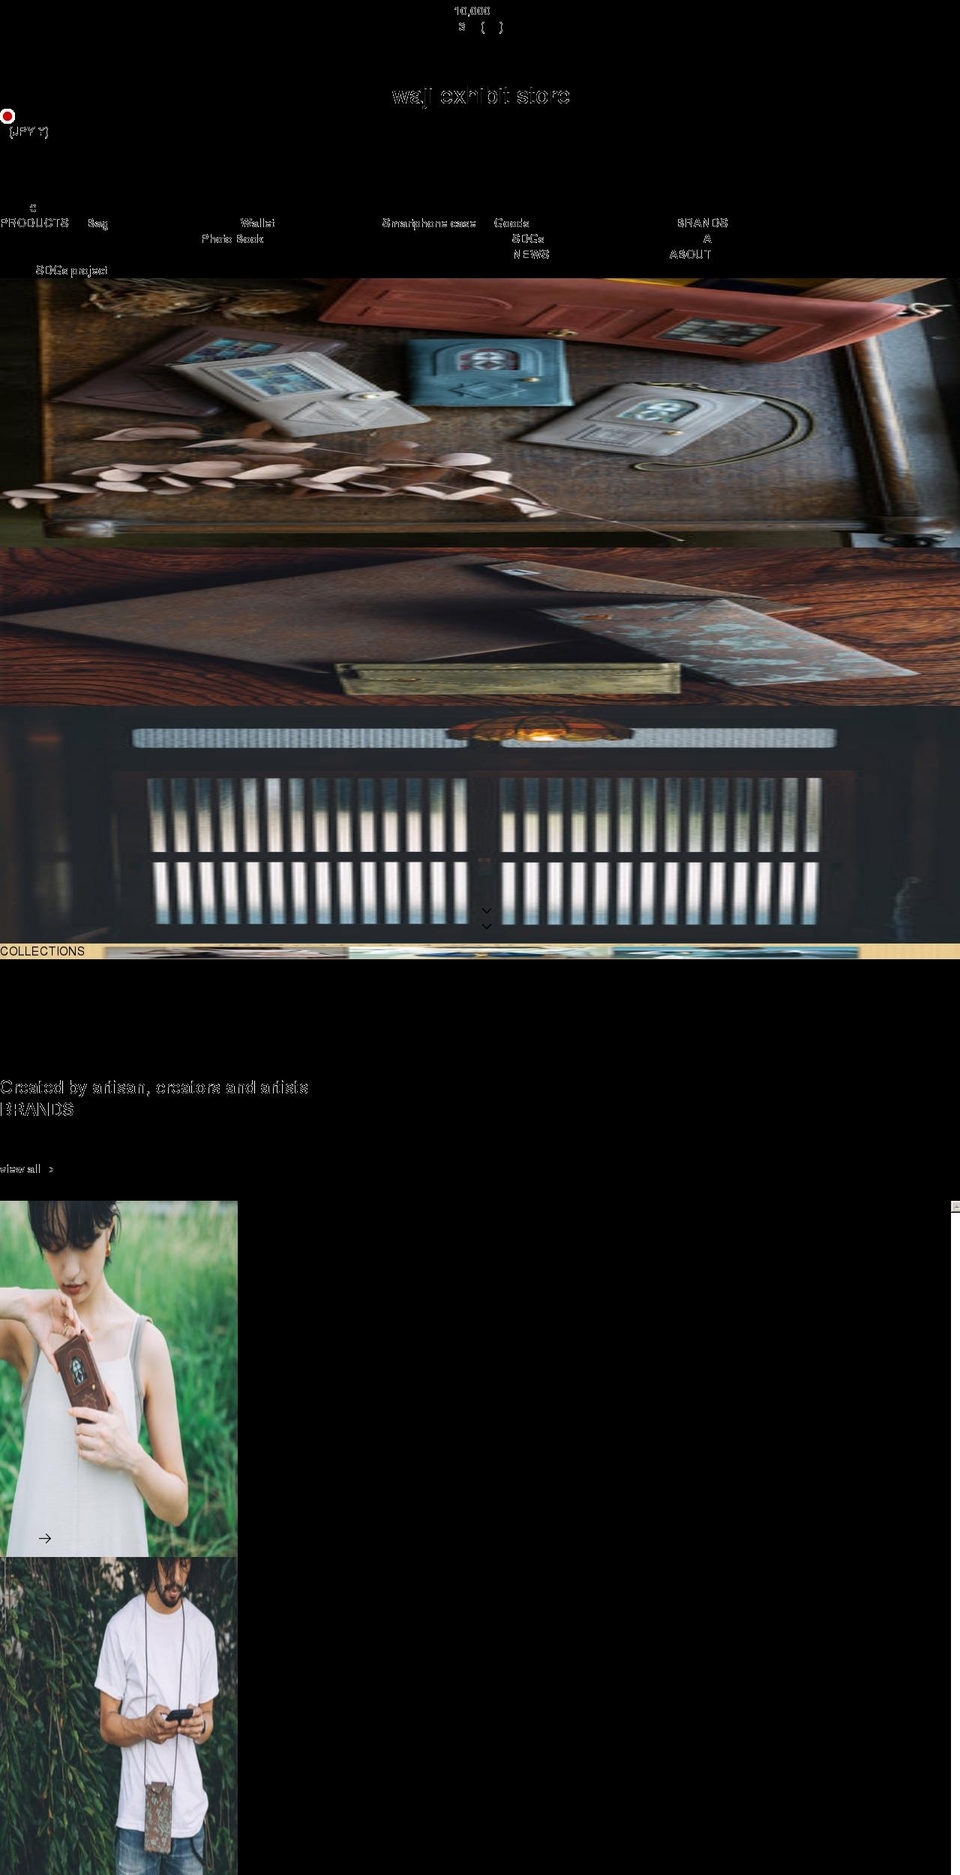 havito.jp shopify website screenshot